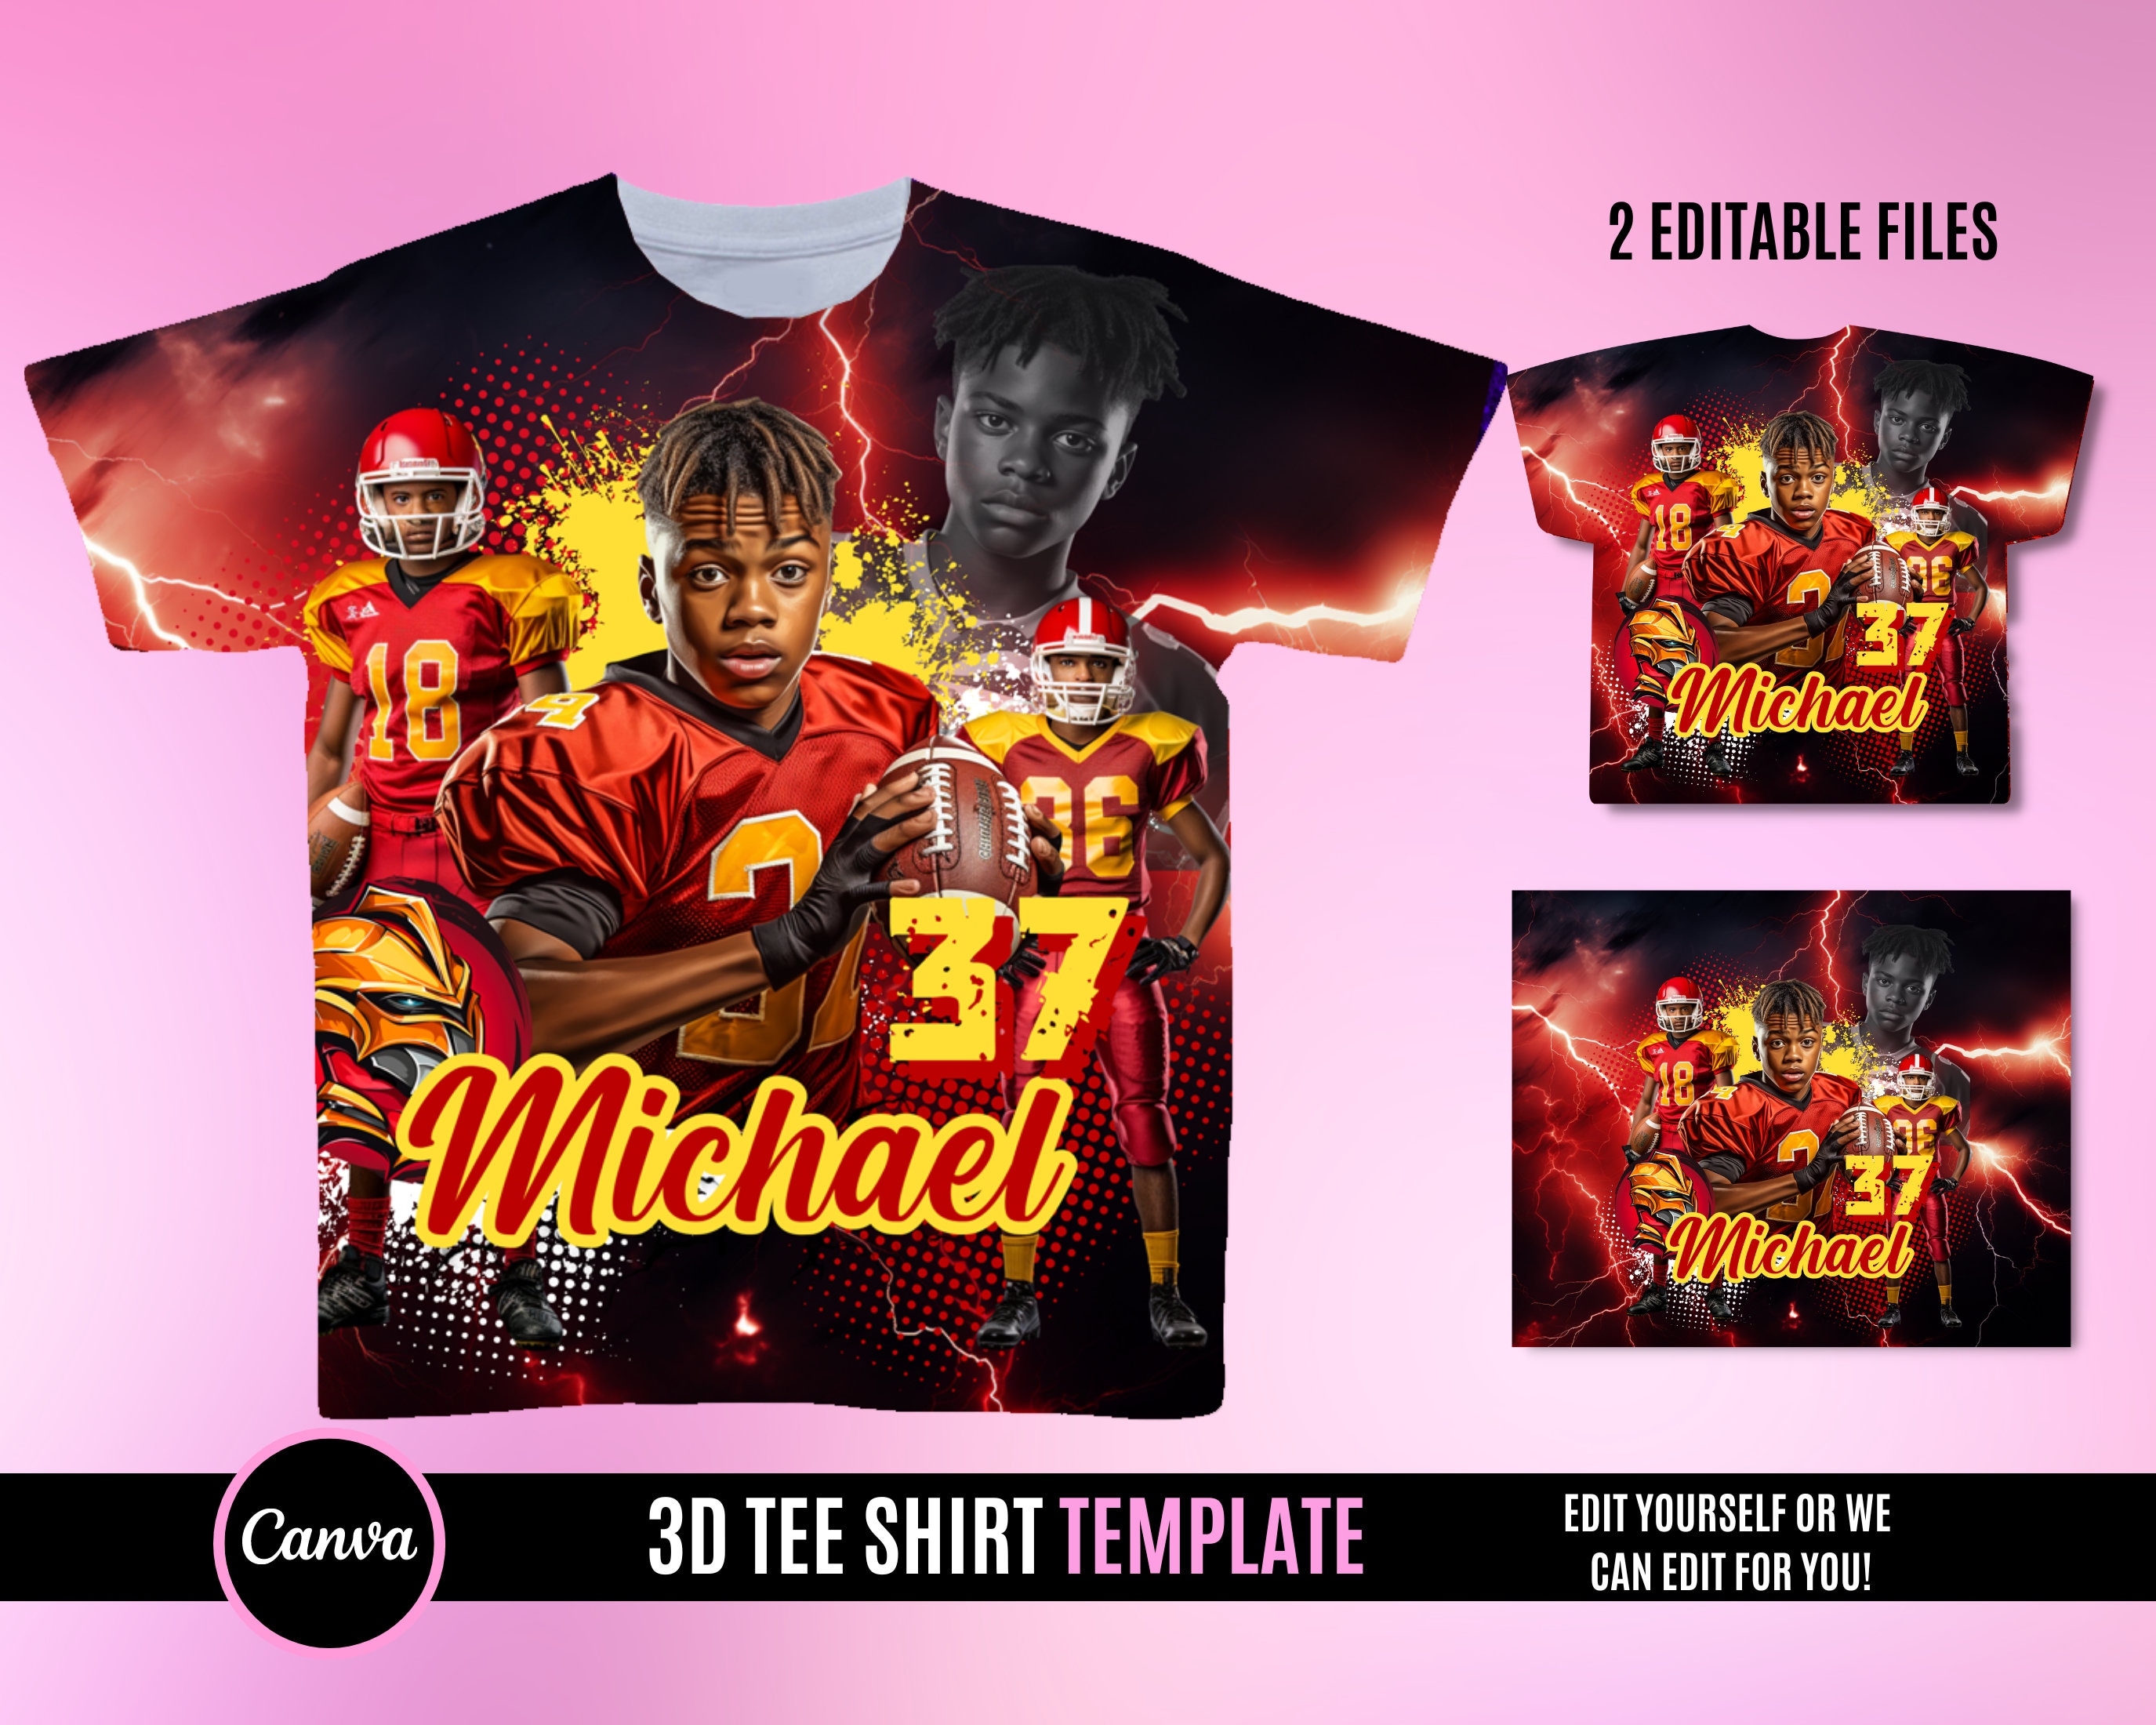 Michael Jordan T-Shirt Design Downloadable T-shirt design, Png file, For  Dtg, dtf, sublimation printing on shirt, hoodies, jackets